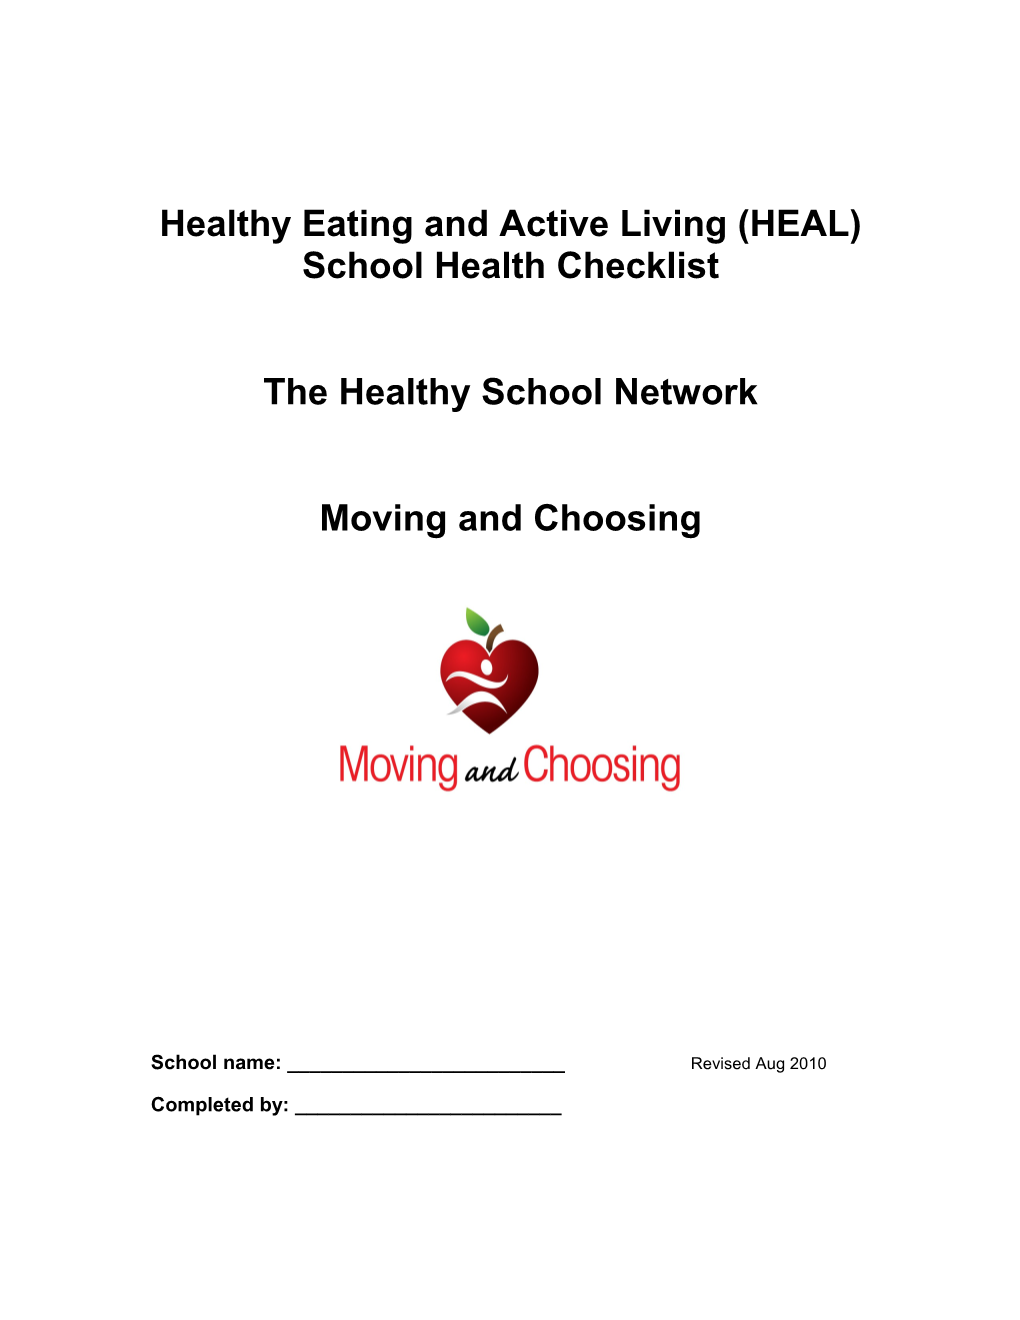 The Comprehensive School Health Checklist